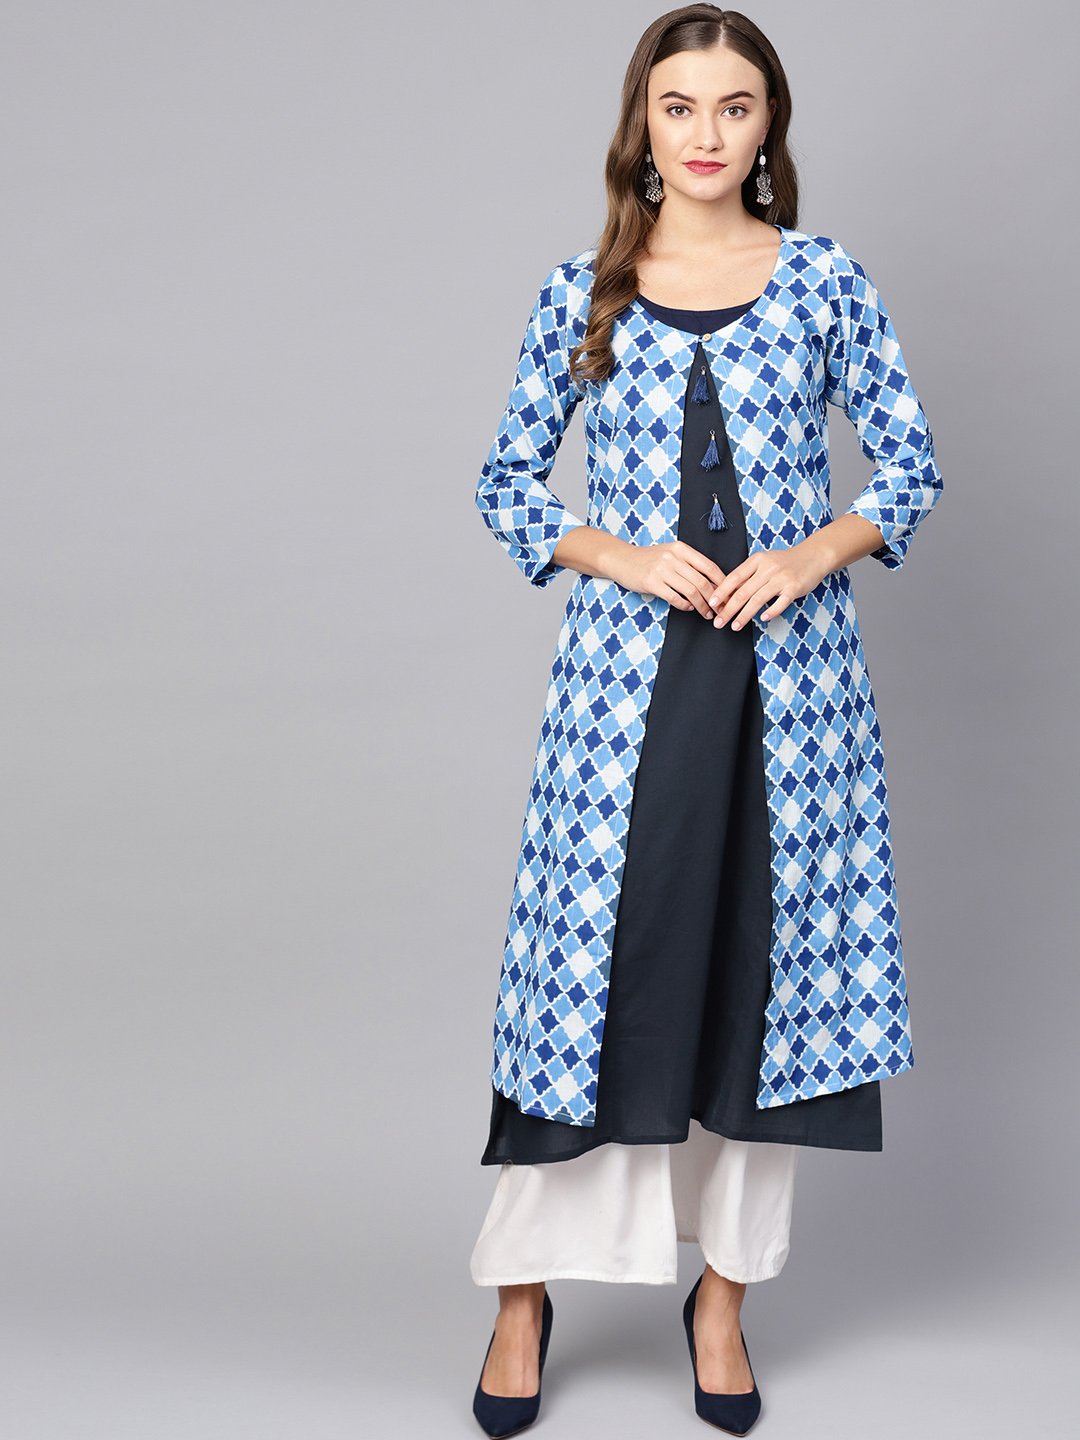 Women's Blue Cotton Printed Full Sleeve Round Neck Casual Kurta Only - Myshka